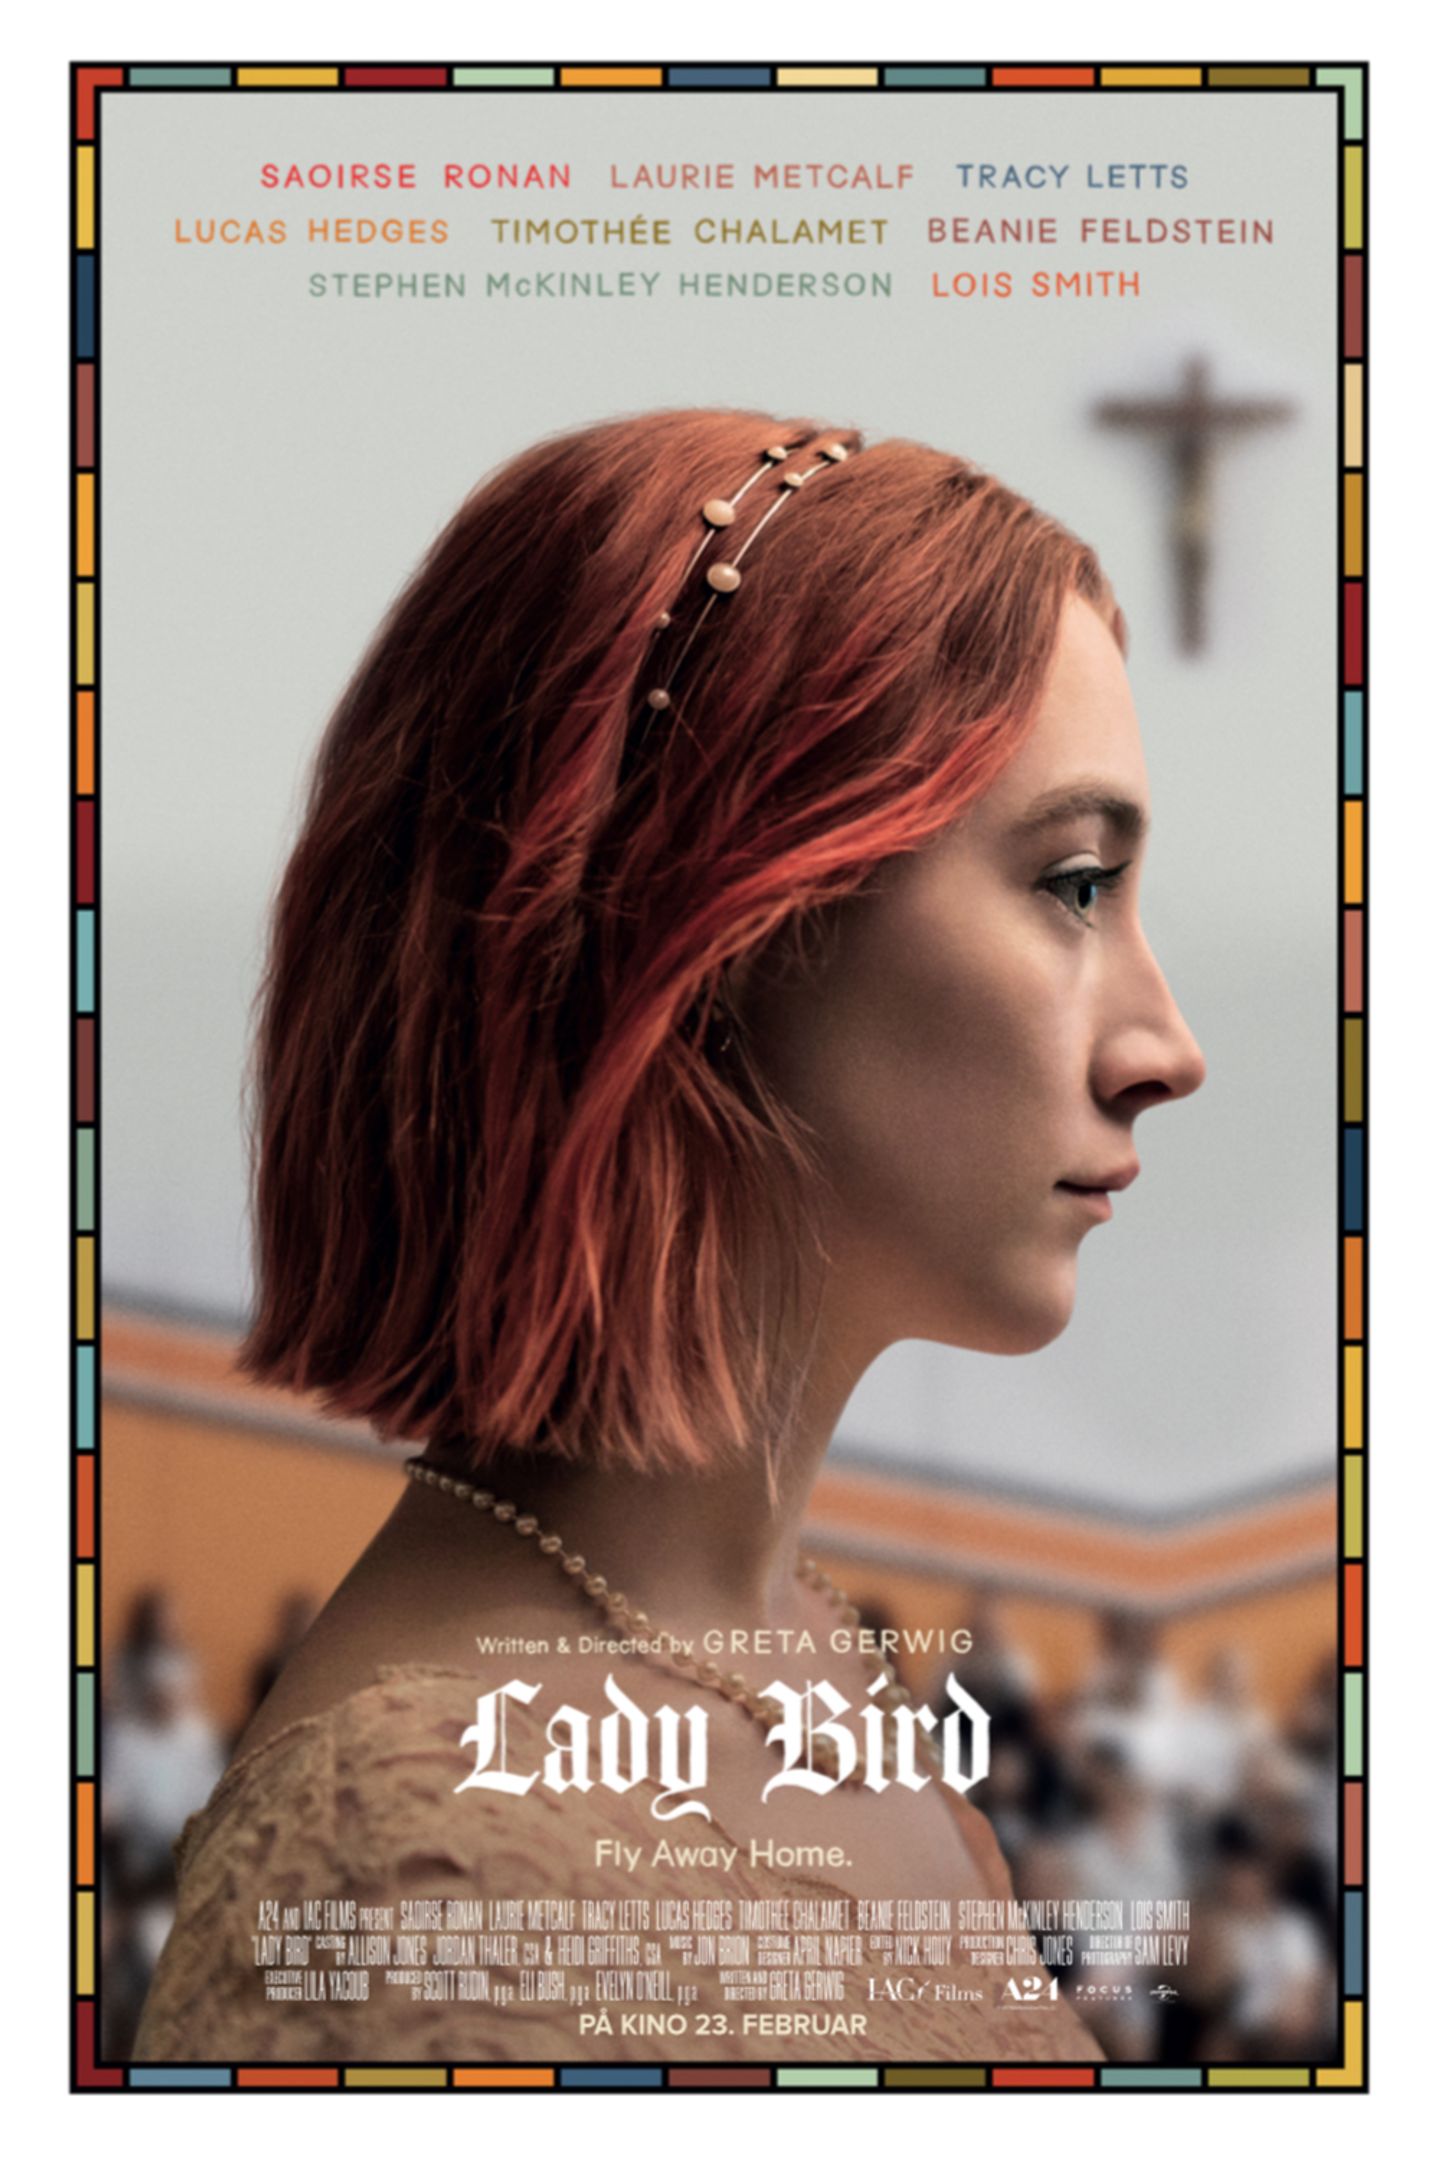 Plakat for 'Lady Bird'